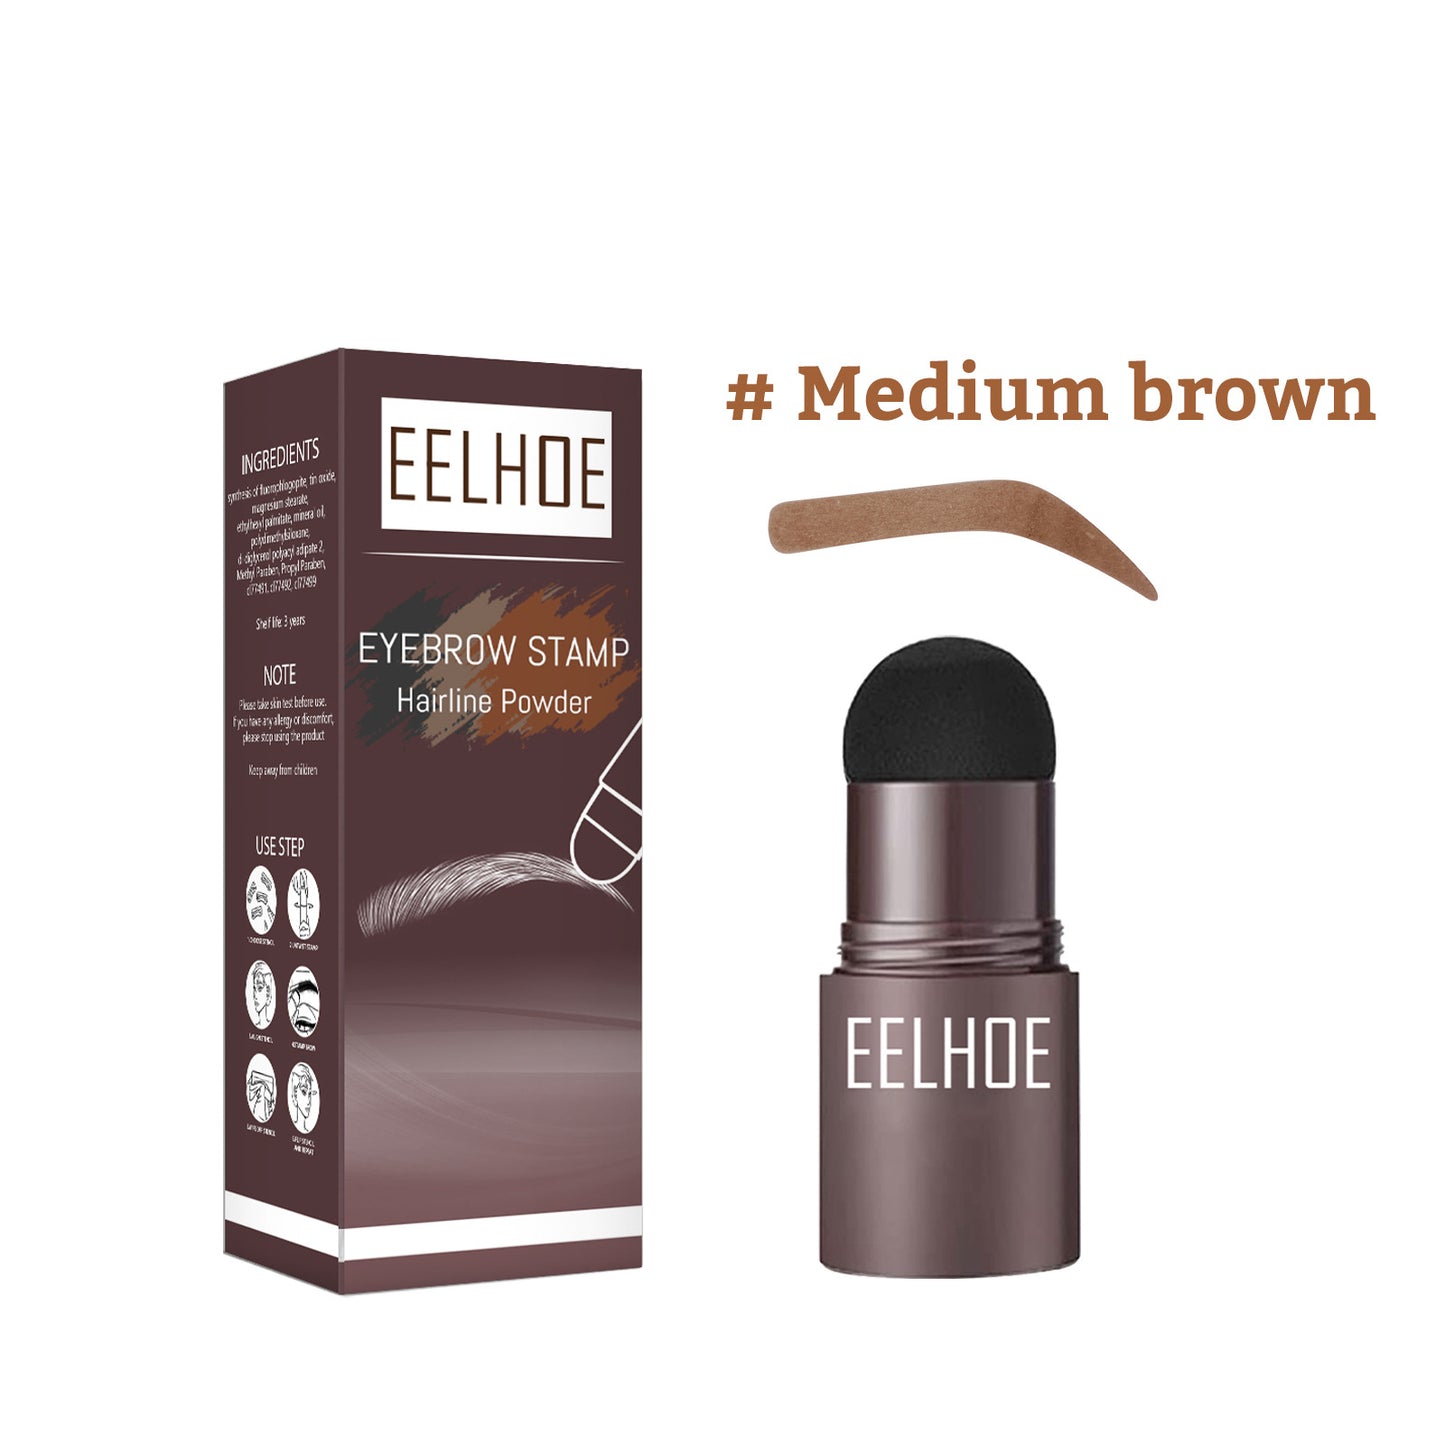 EELHOE mold thrush artifact lazy eyebrow filling makeup eyebrow cake hairline powder repairing powder waterproof and sweat-proof